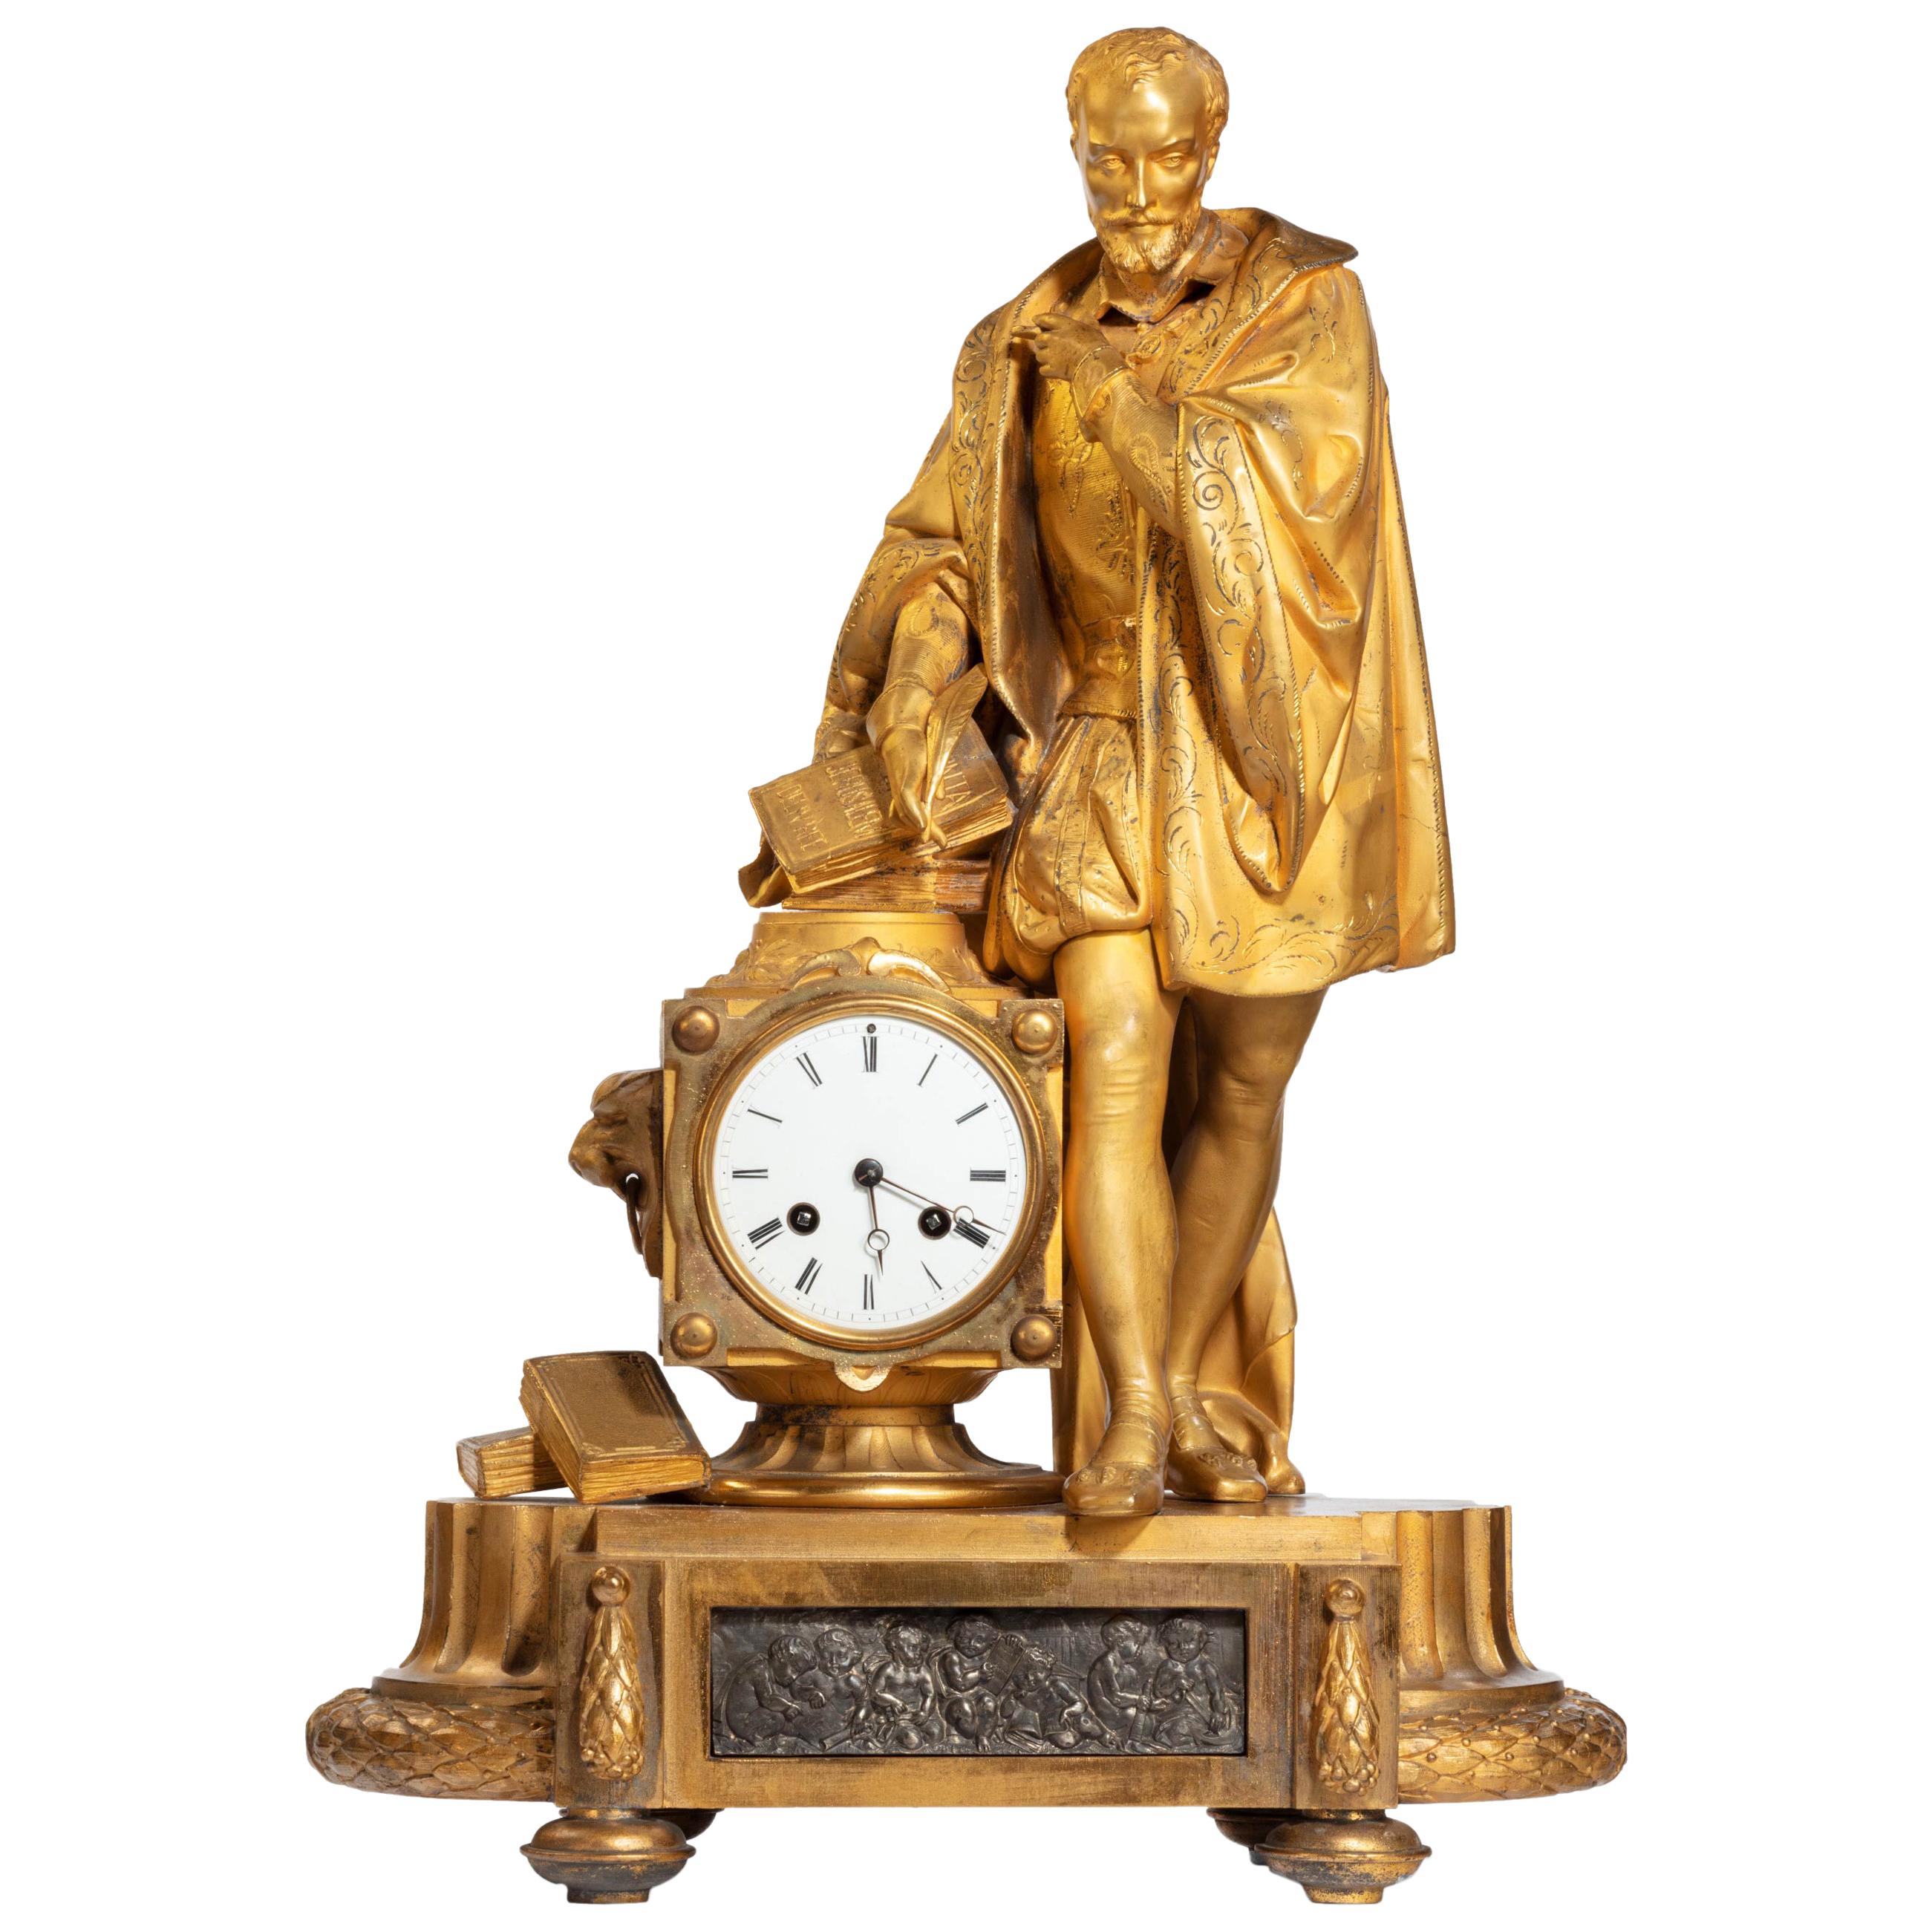 Very Fine Quality 19th Century Gilt Bronze and Bronze Mantel Clock